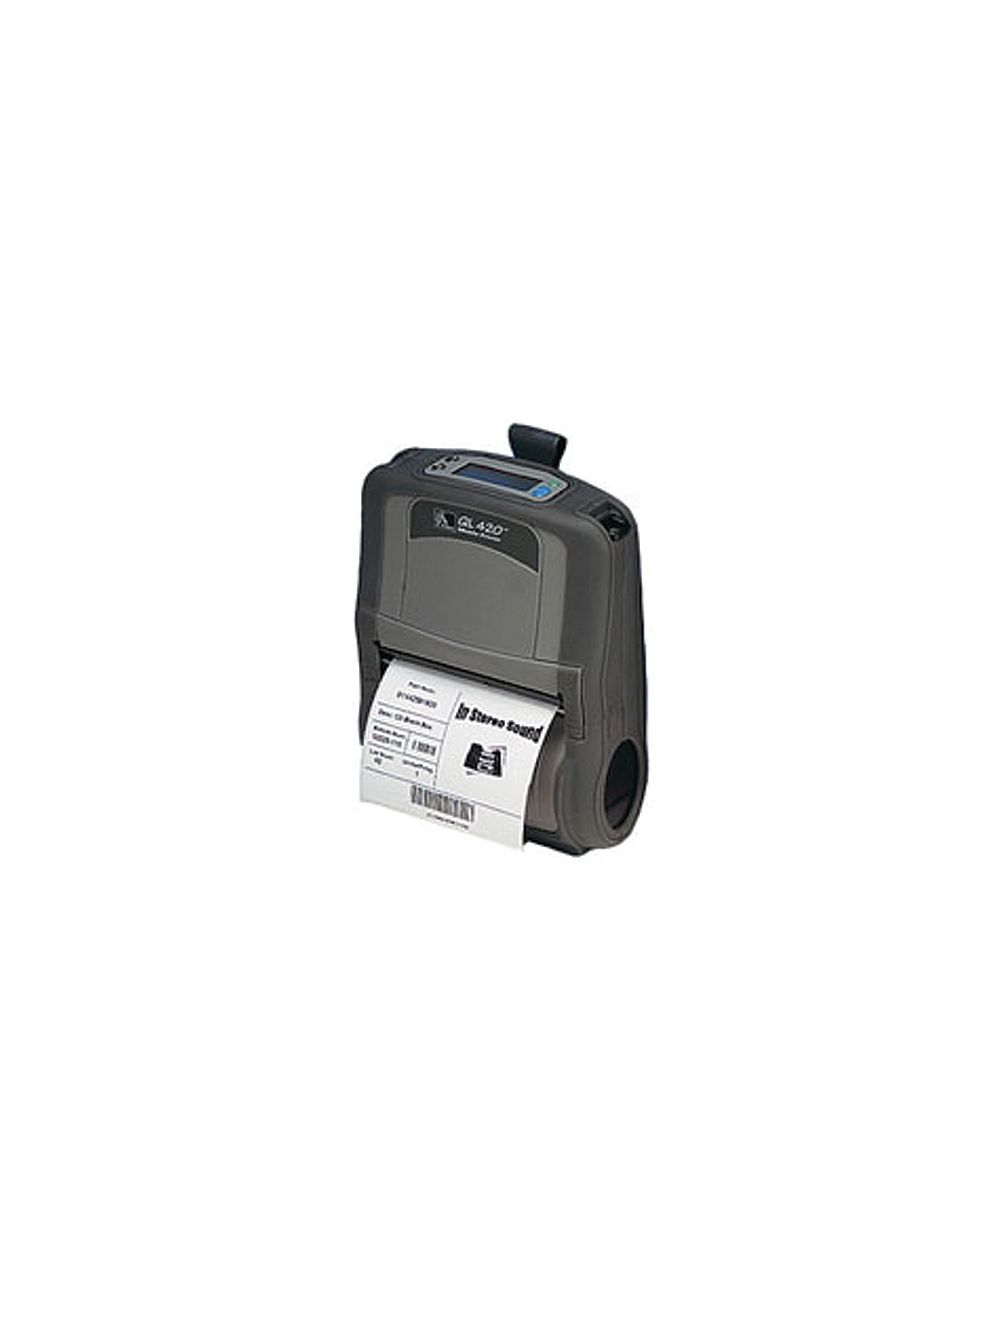 Zebra Ql420 Plus Thermal Label Printer With Bluetooth 8125